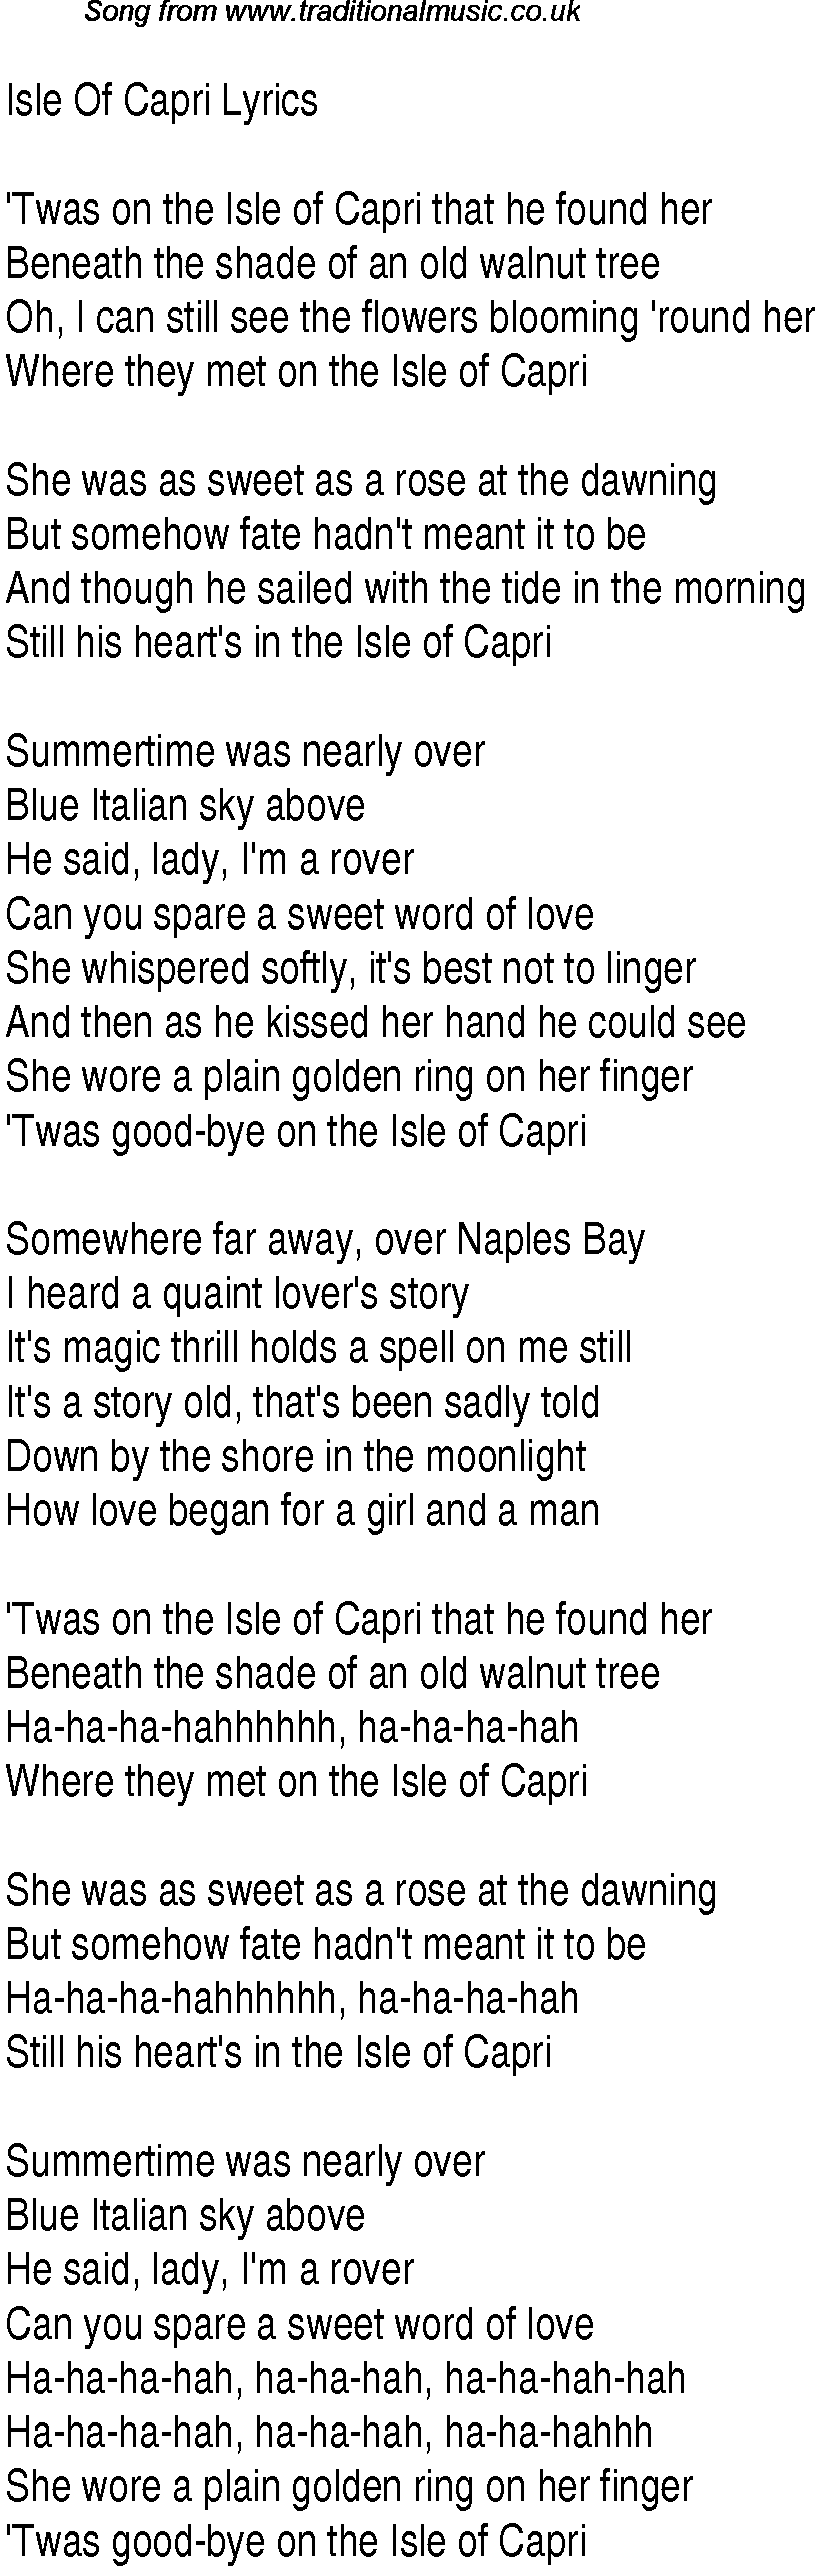 1940s top songs - lyrics for Isle Of Capri(Gracie Fields)